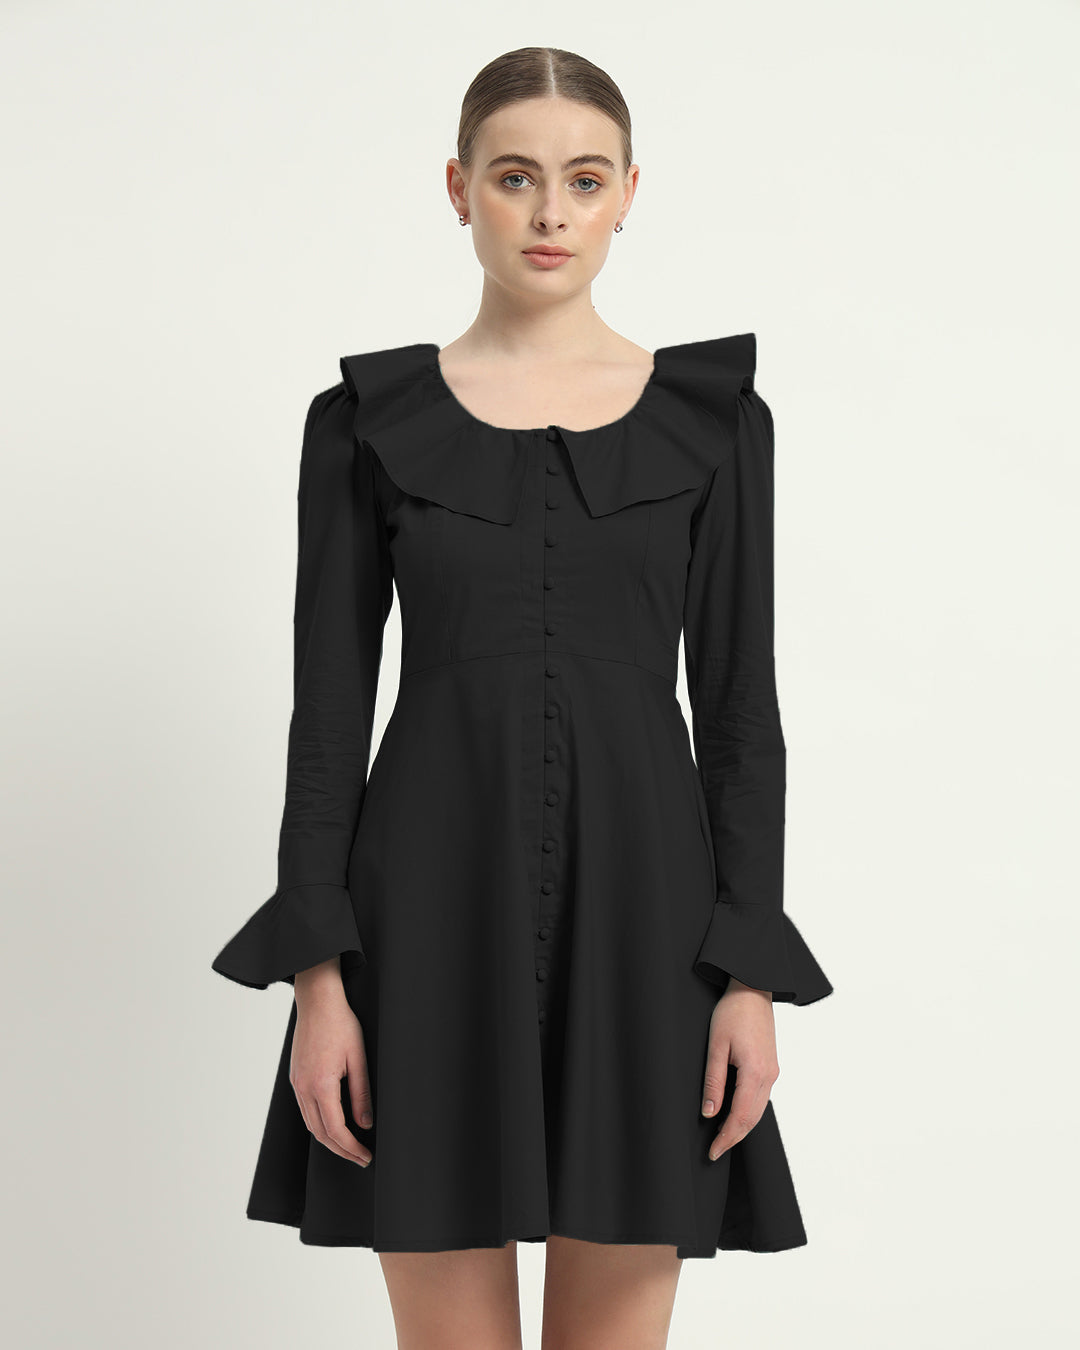 The Fredonia Noir Cotton Dress